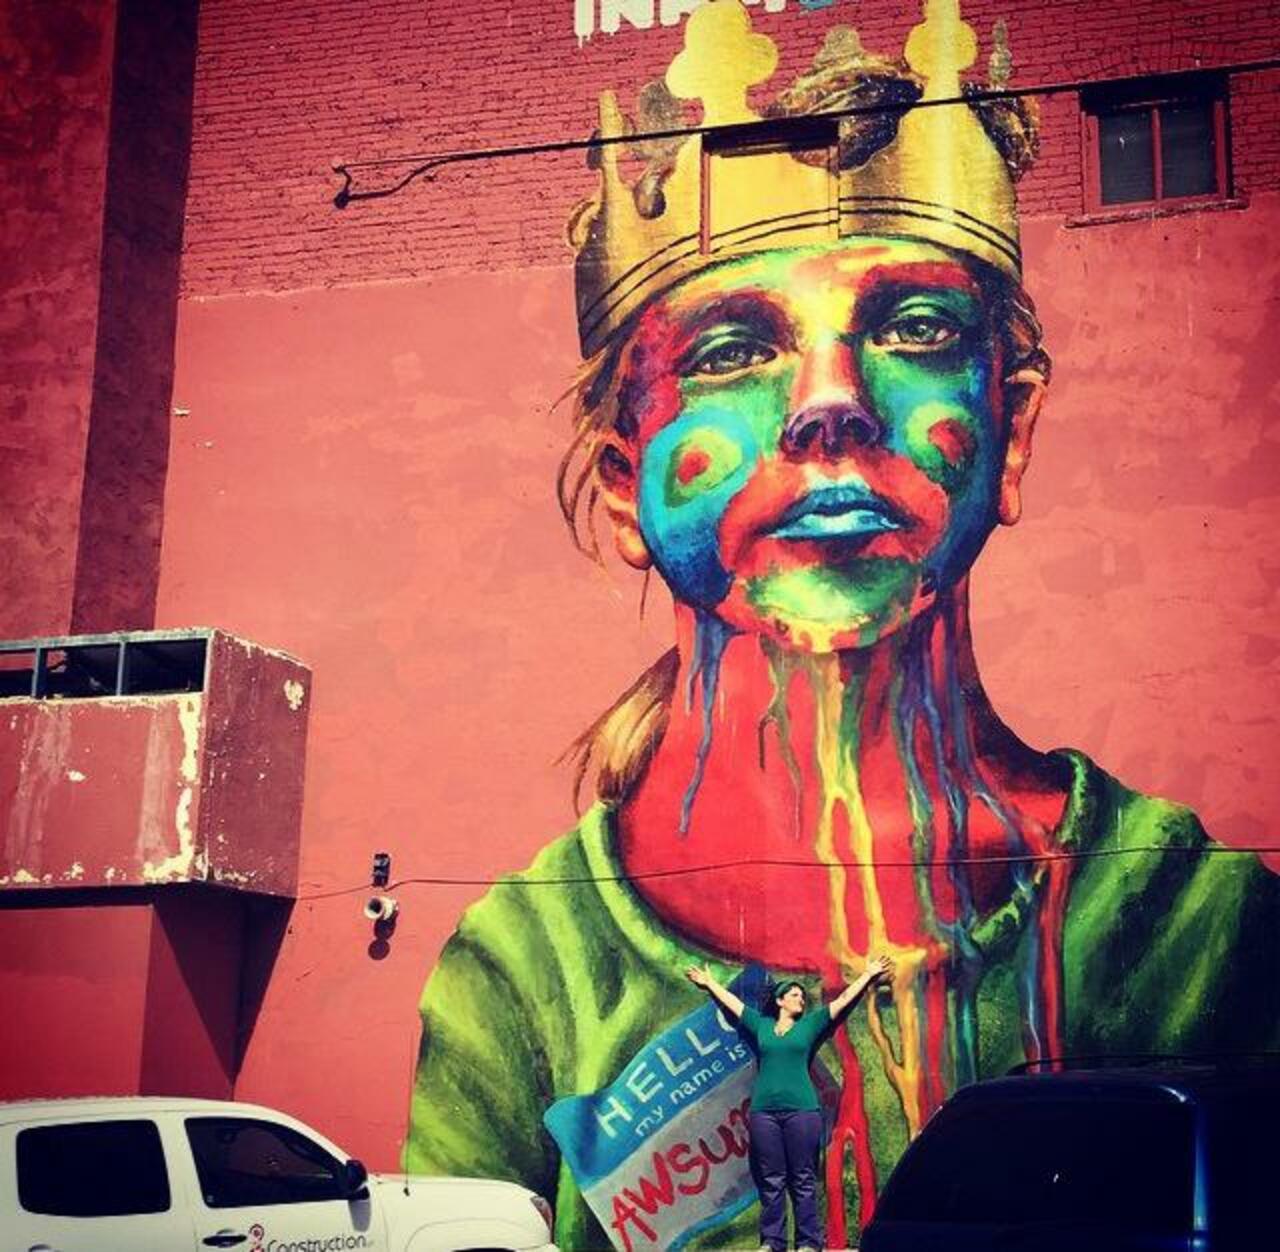 Street Art by Naomi Haverland in Denver Colorado 

#art #arte #graffiti #streetart http://t.co/I9LPUOIJpH